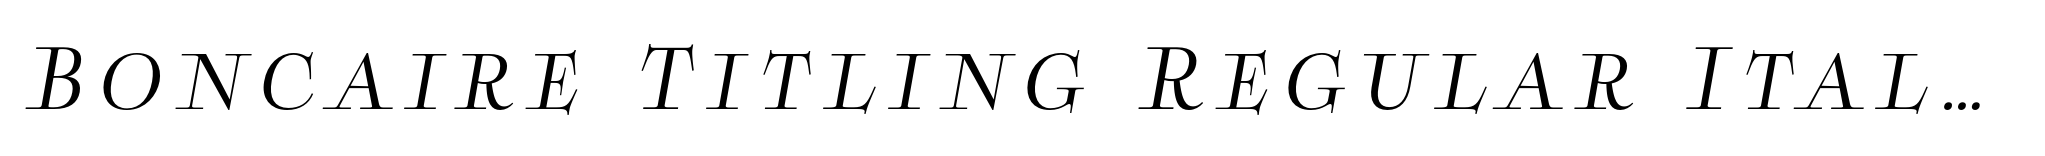 Boncaire Titling Regular Italic image